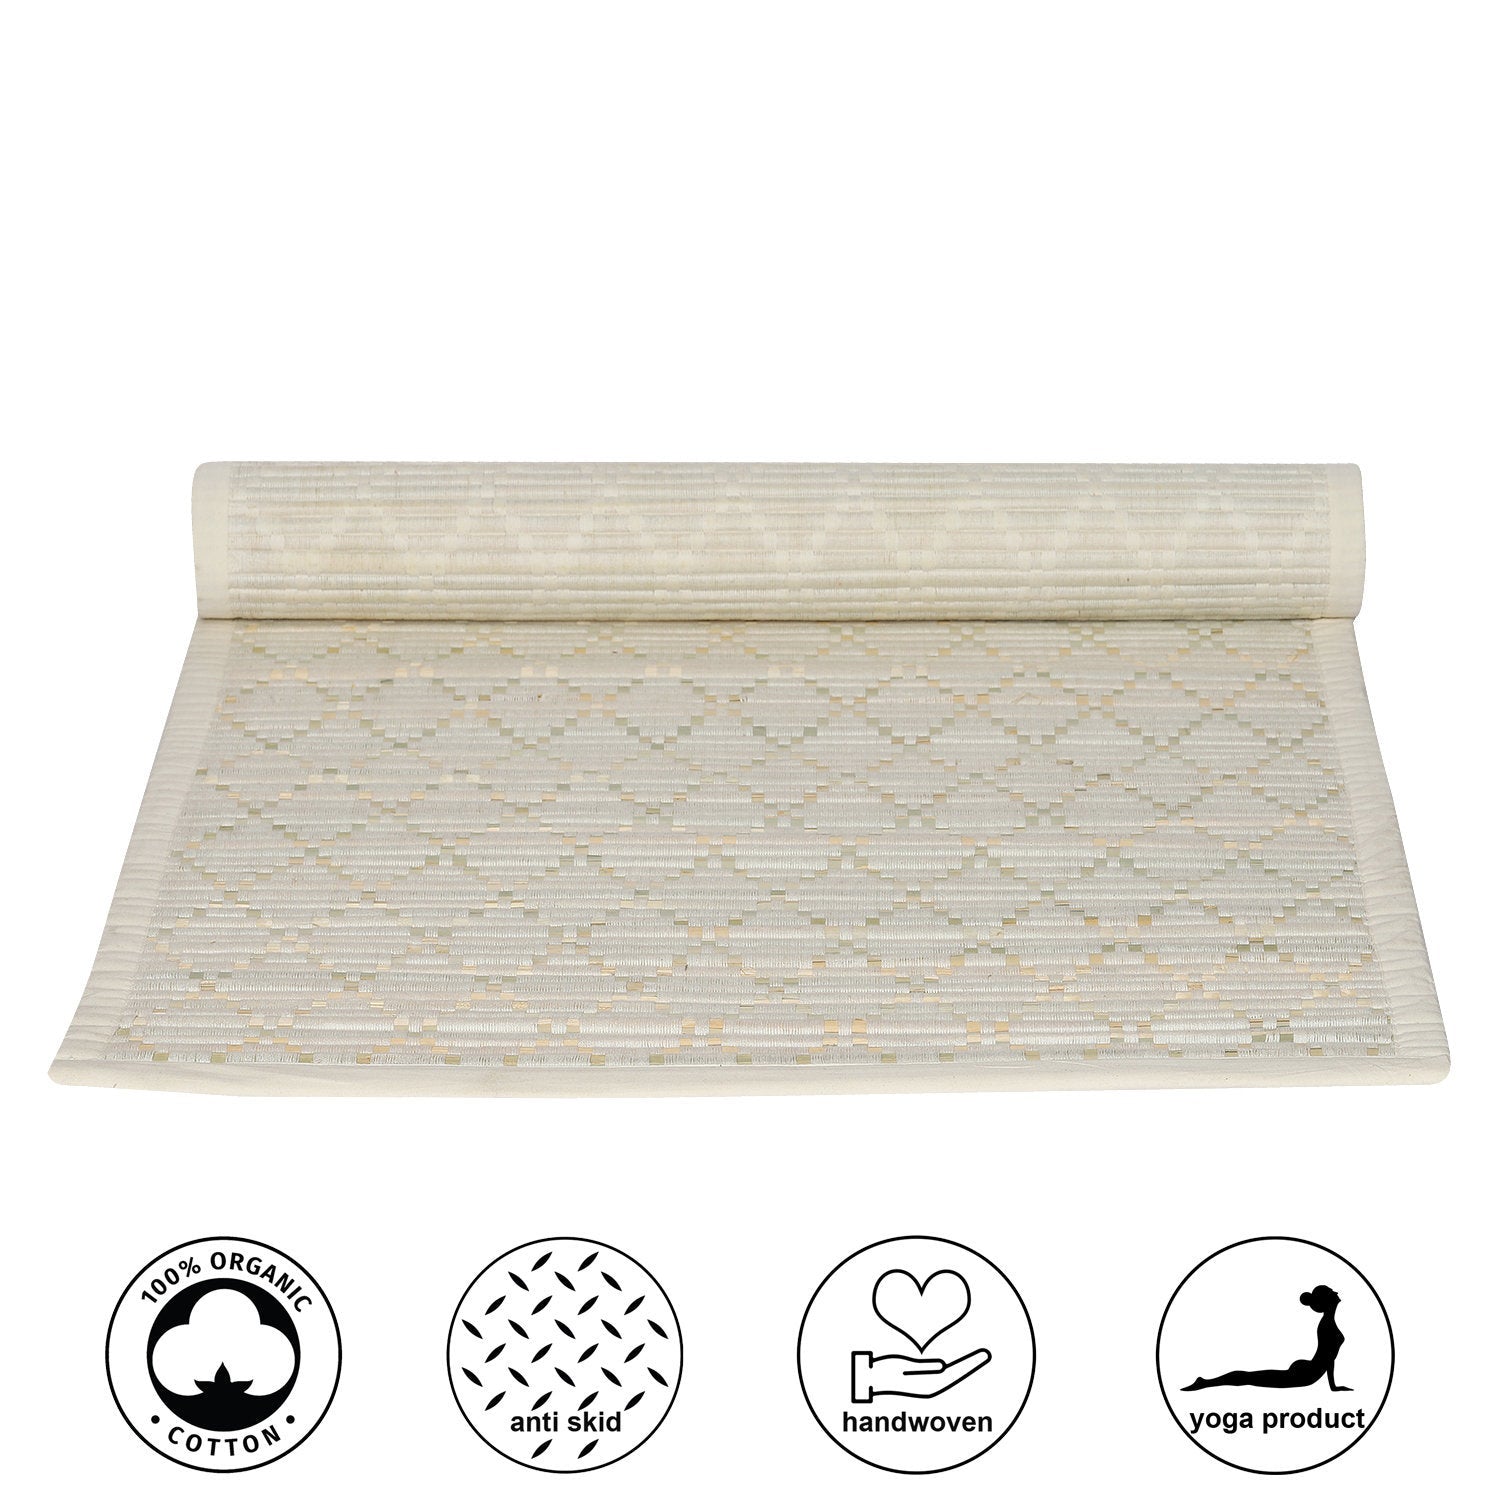 KitchExpo Yoga Mat with Anti Skid Texture